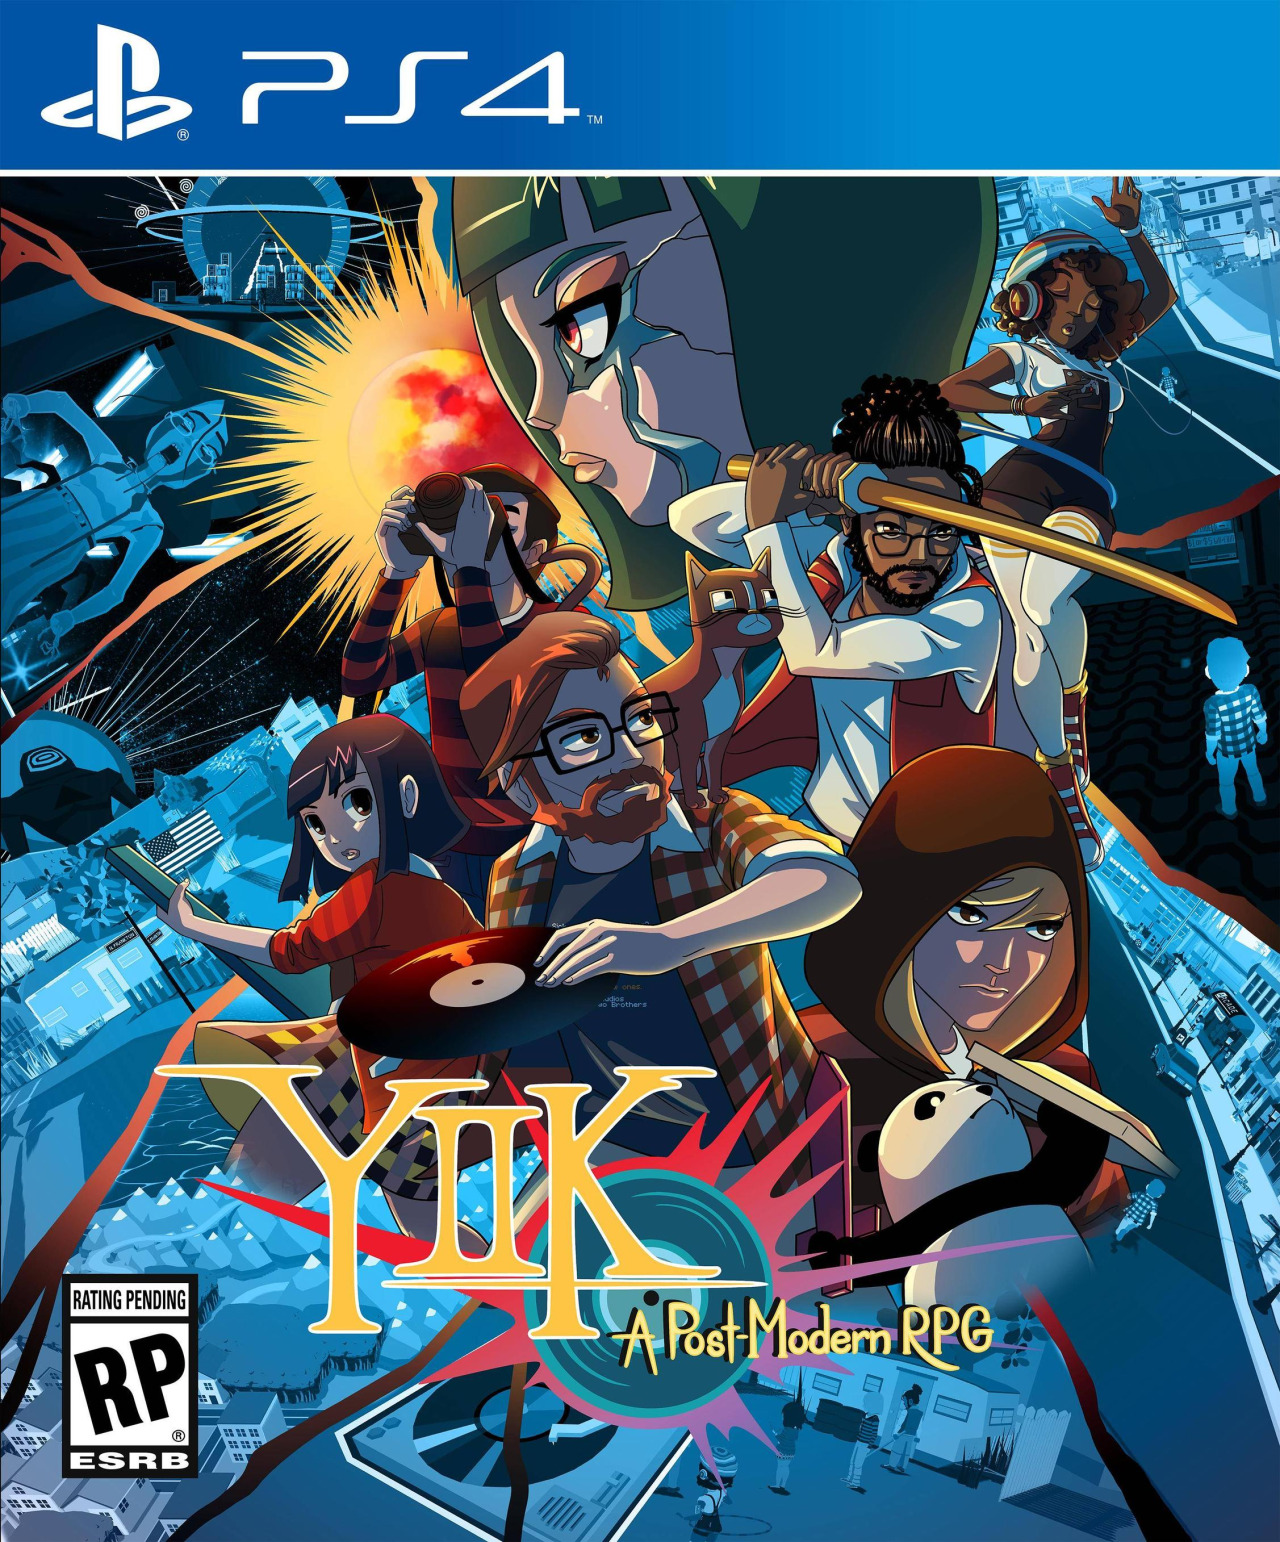 jaquette du jeu vidéo YIIK: A Postmodern RPG